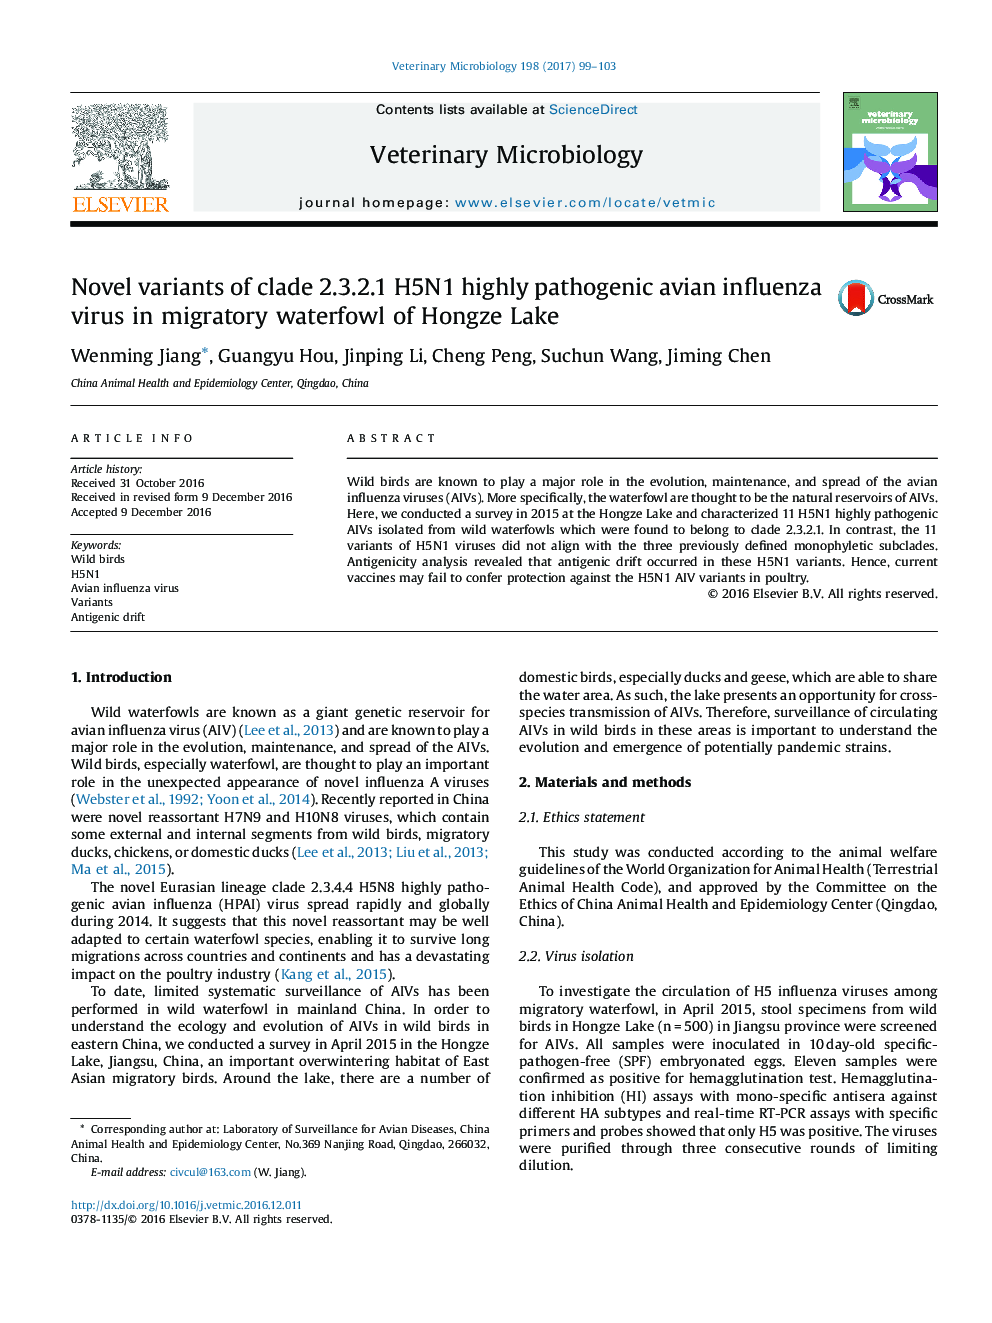 Novel variants of clade 2.3.2.1 H5N1 highly pathogenic avian influenza virus in migratory waterfowl of Hongze Lake